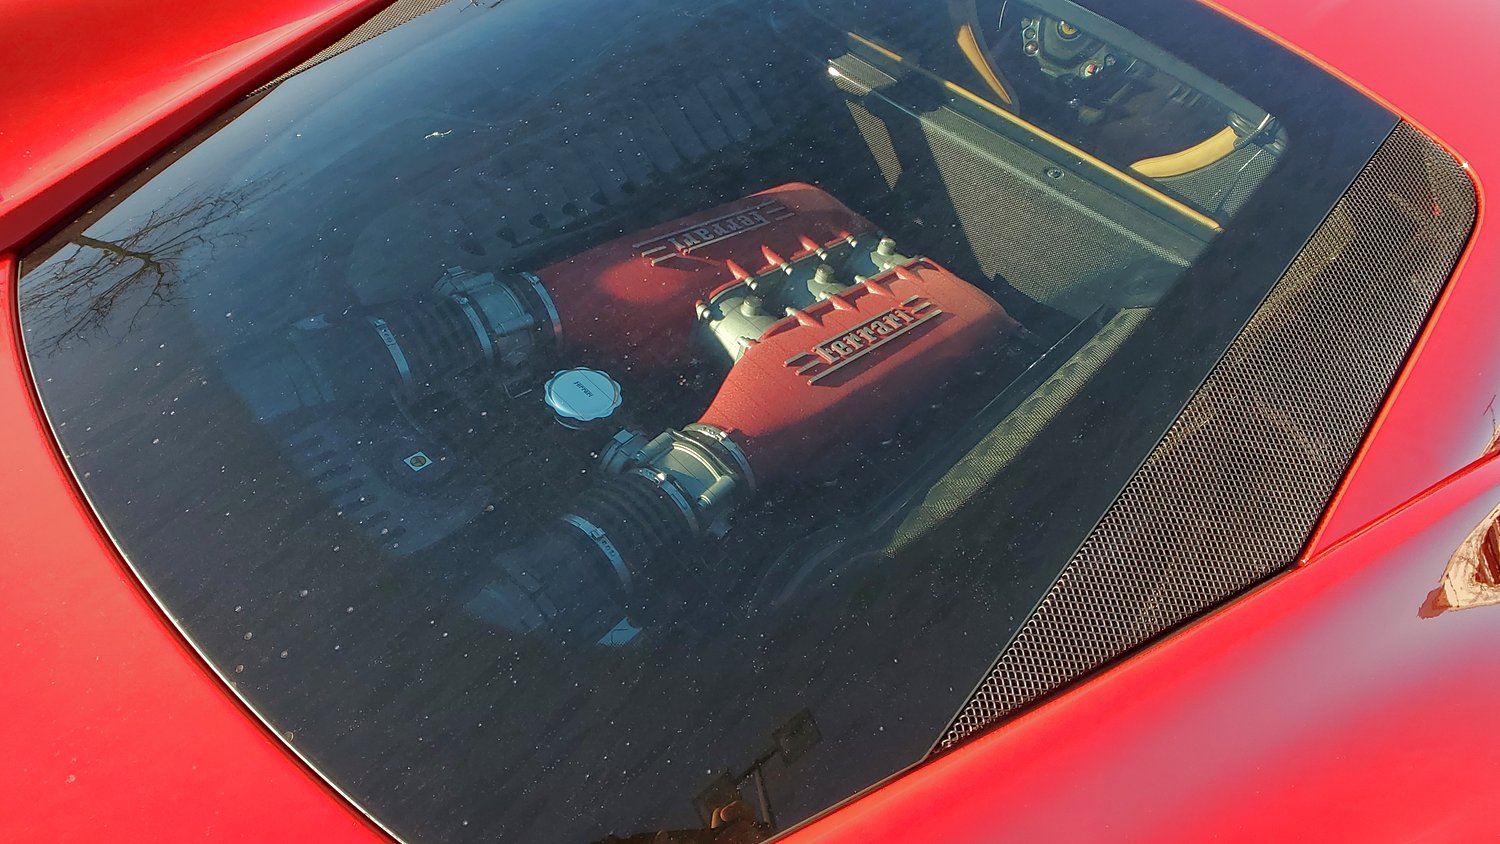 Ferrari windowed engine bay.